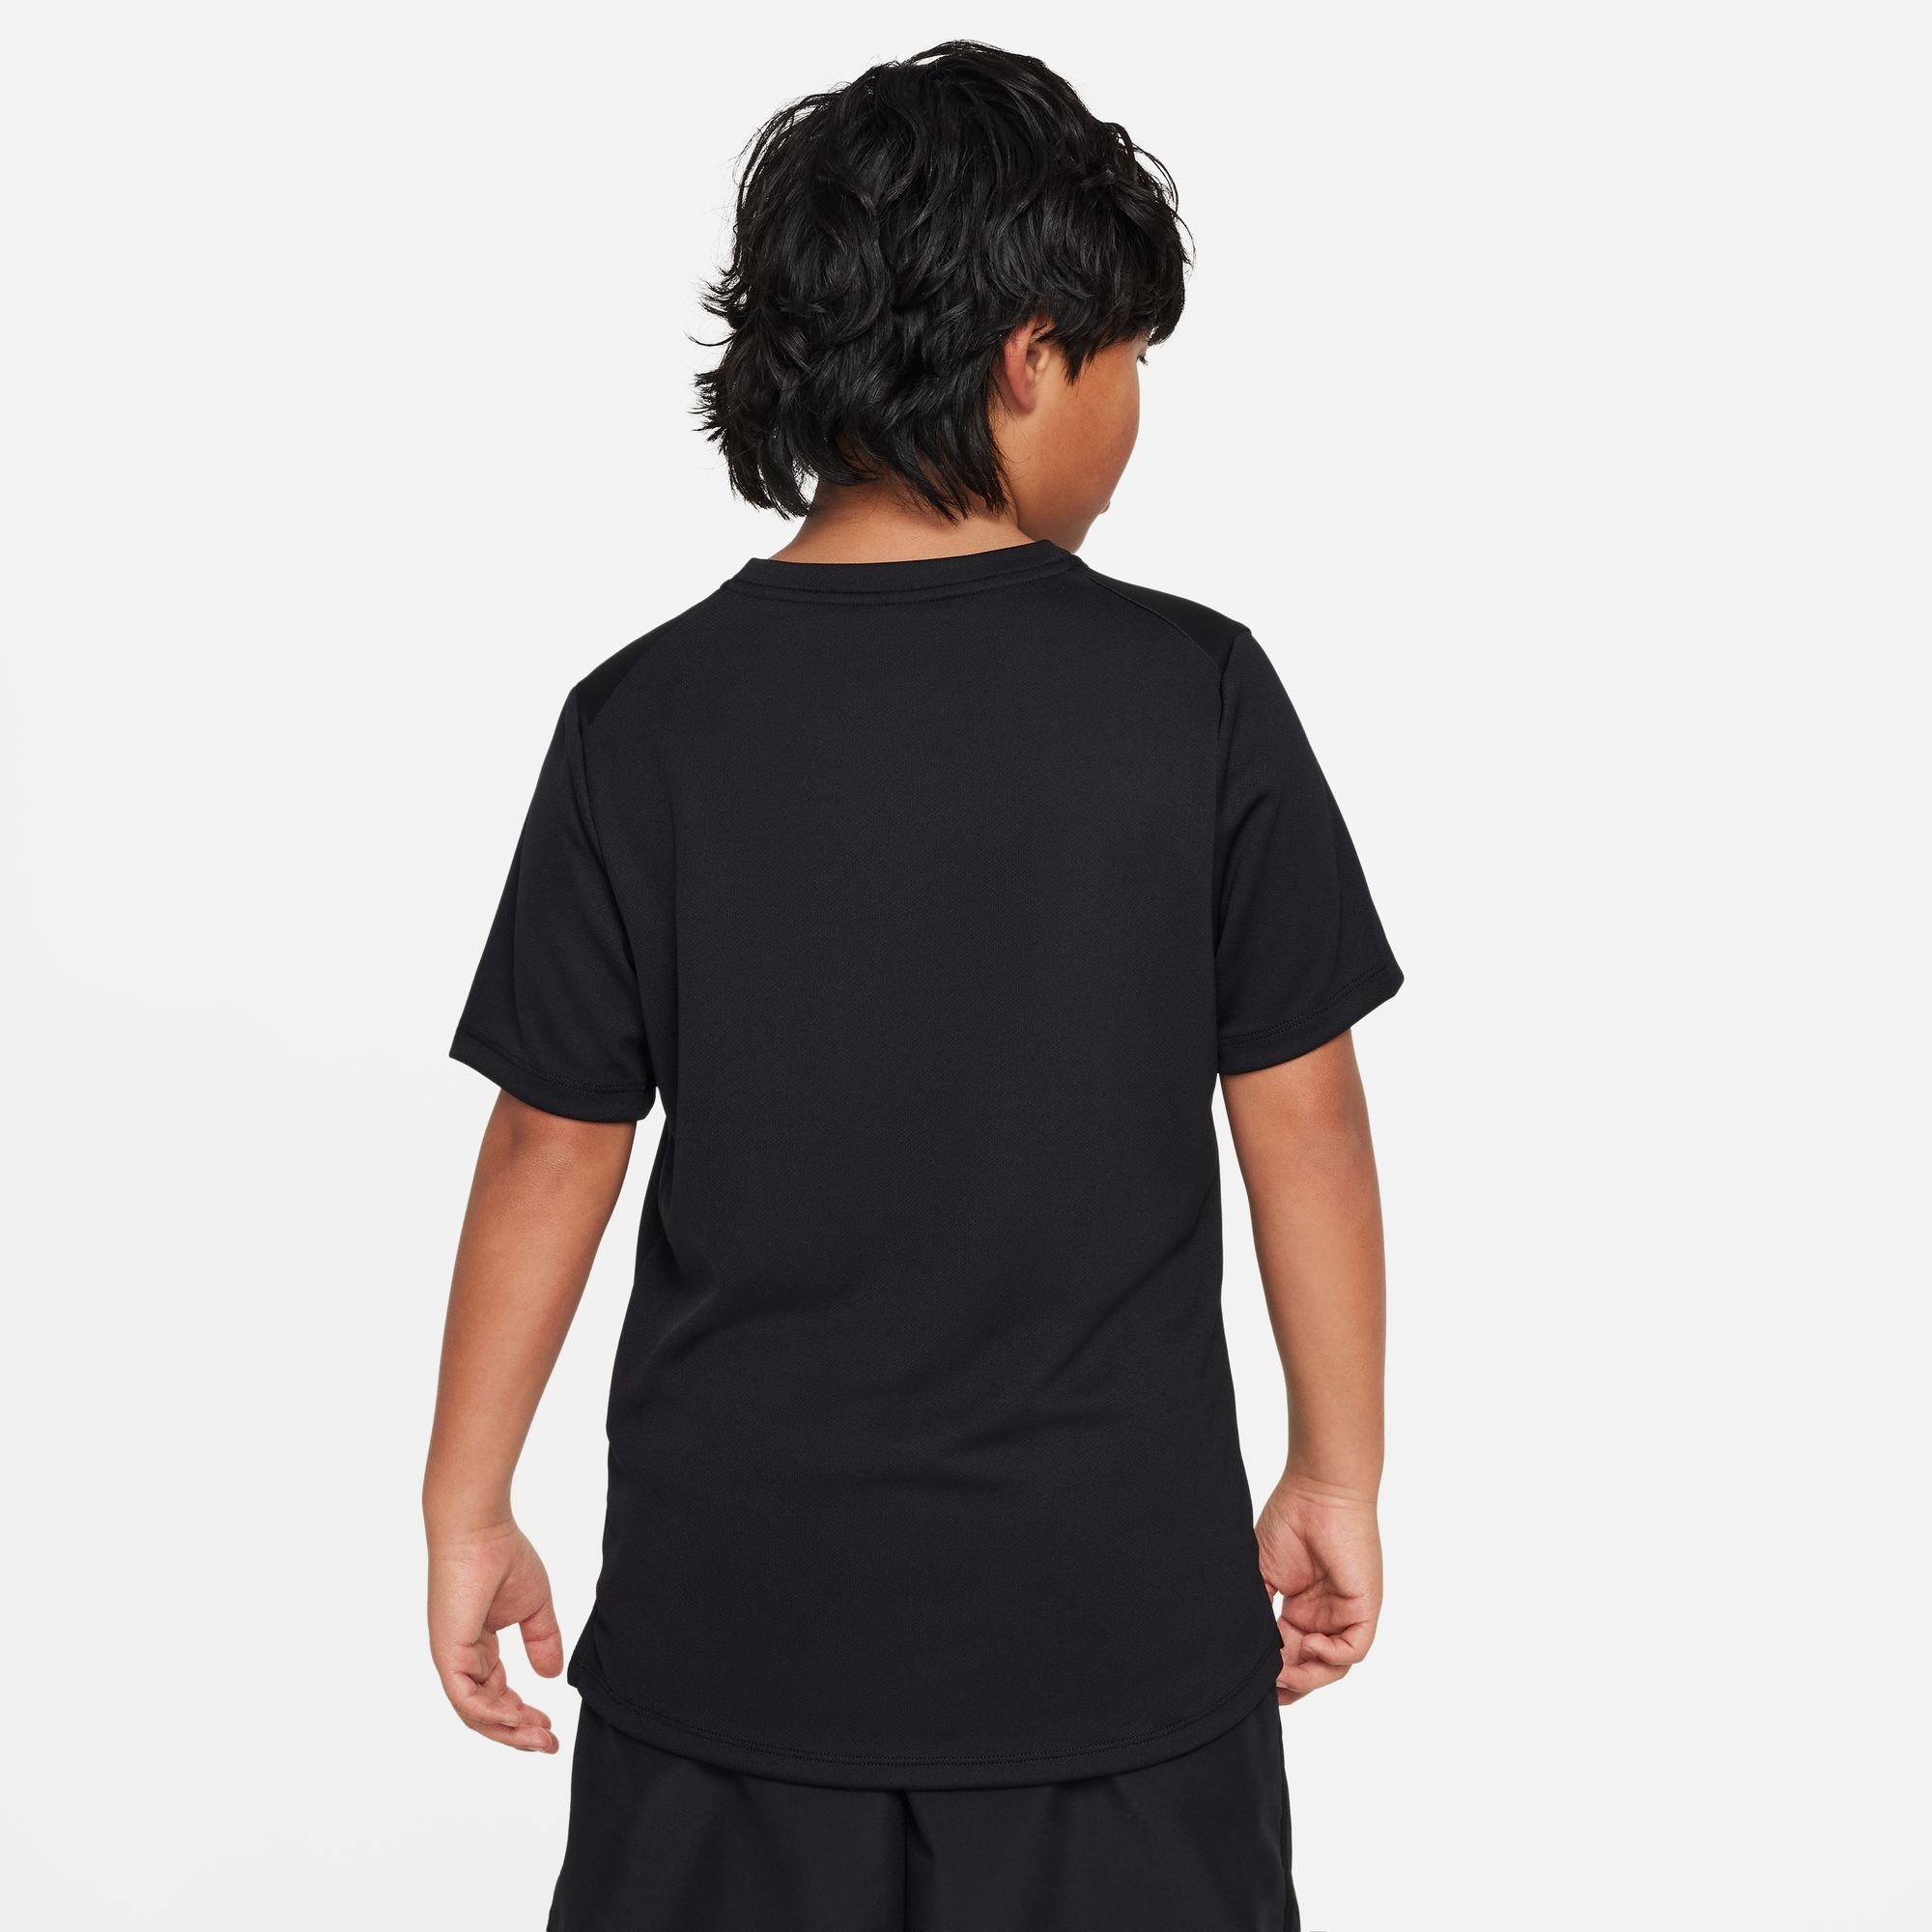 Nike Trainingsshirt KIDS' TRAINING TOP BIG DRI-FIT SILV SHORT-SLEEVE BLACK/REFLECTIVE MILER (BOYS)